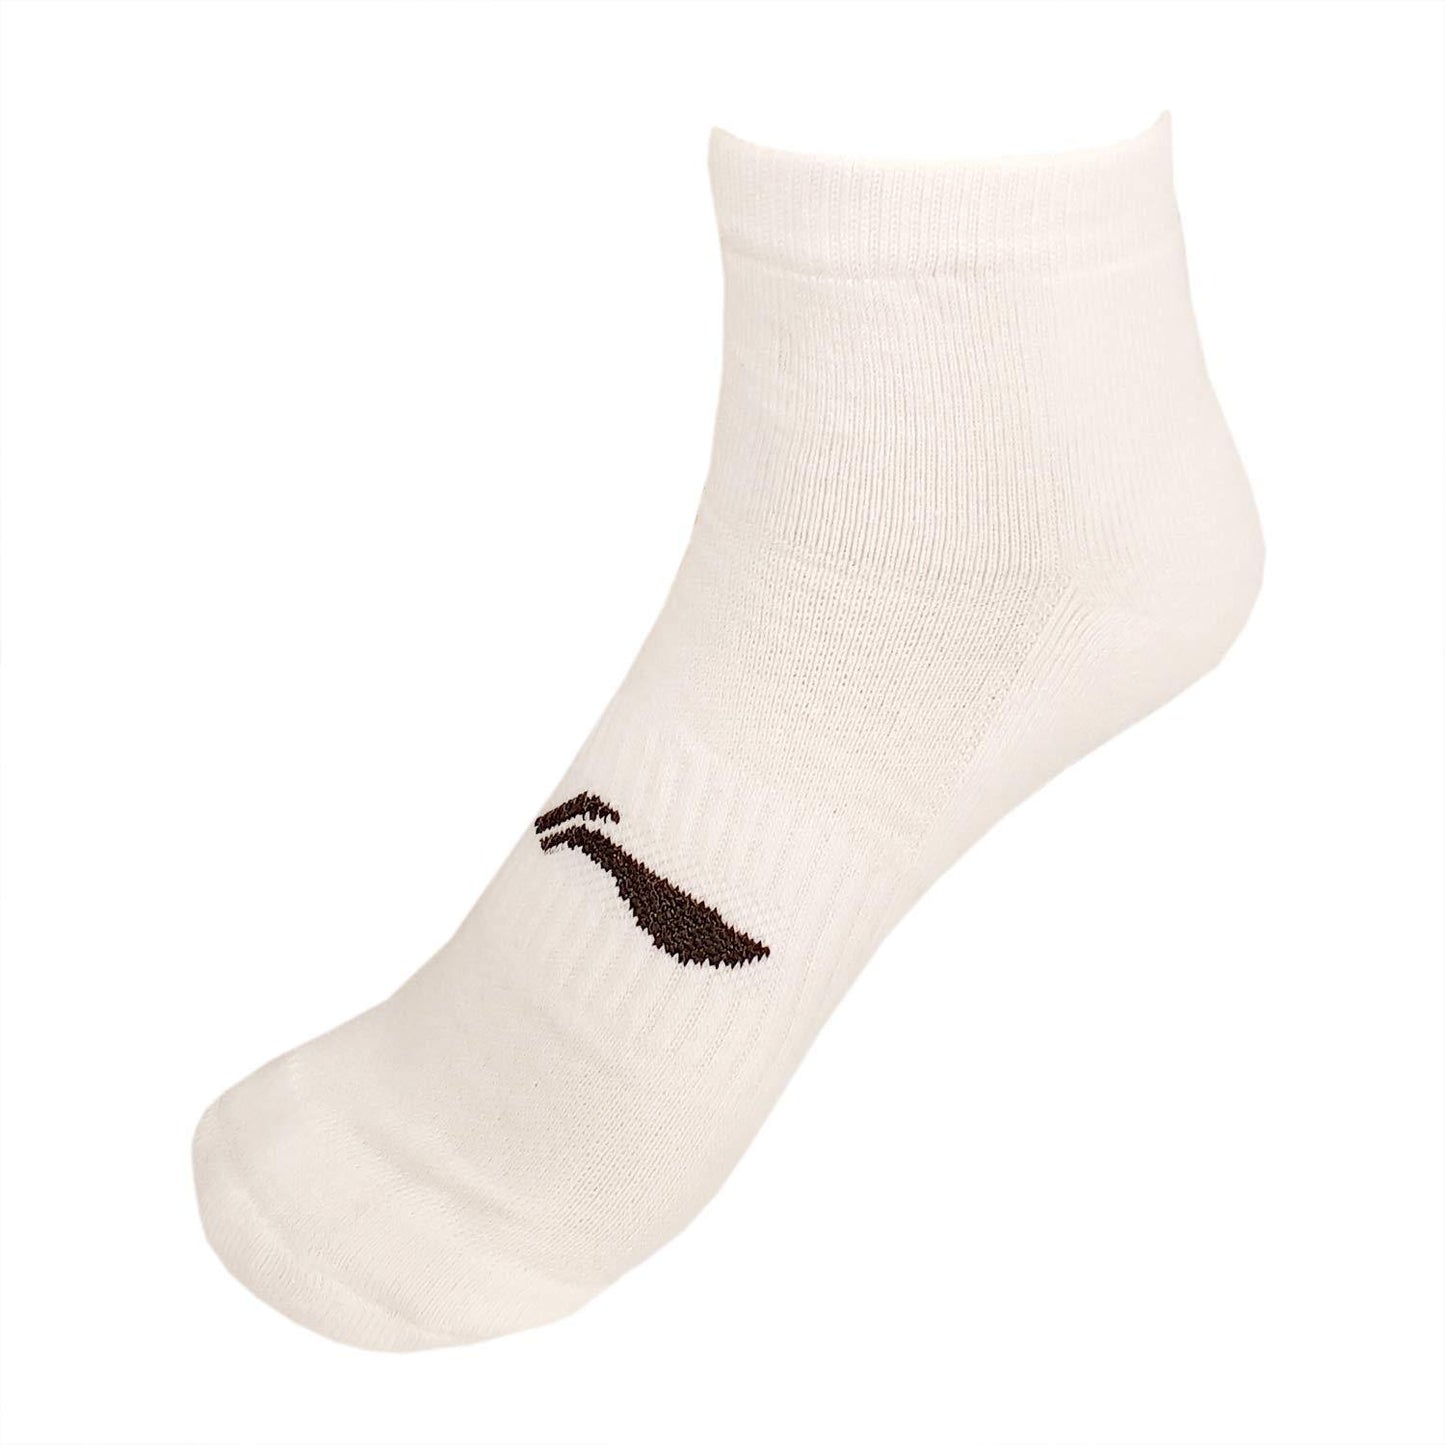 Li-Ning Cotton Men's Sports Socks, Quarter length, Pack of 3, White - Best Price online Prokicksports.com